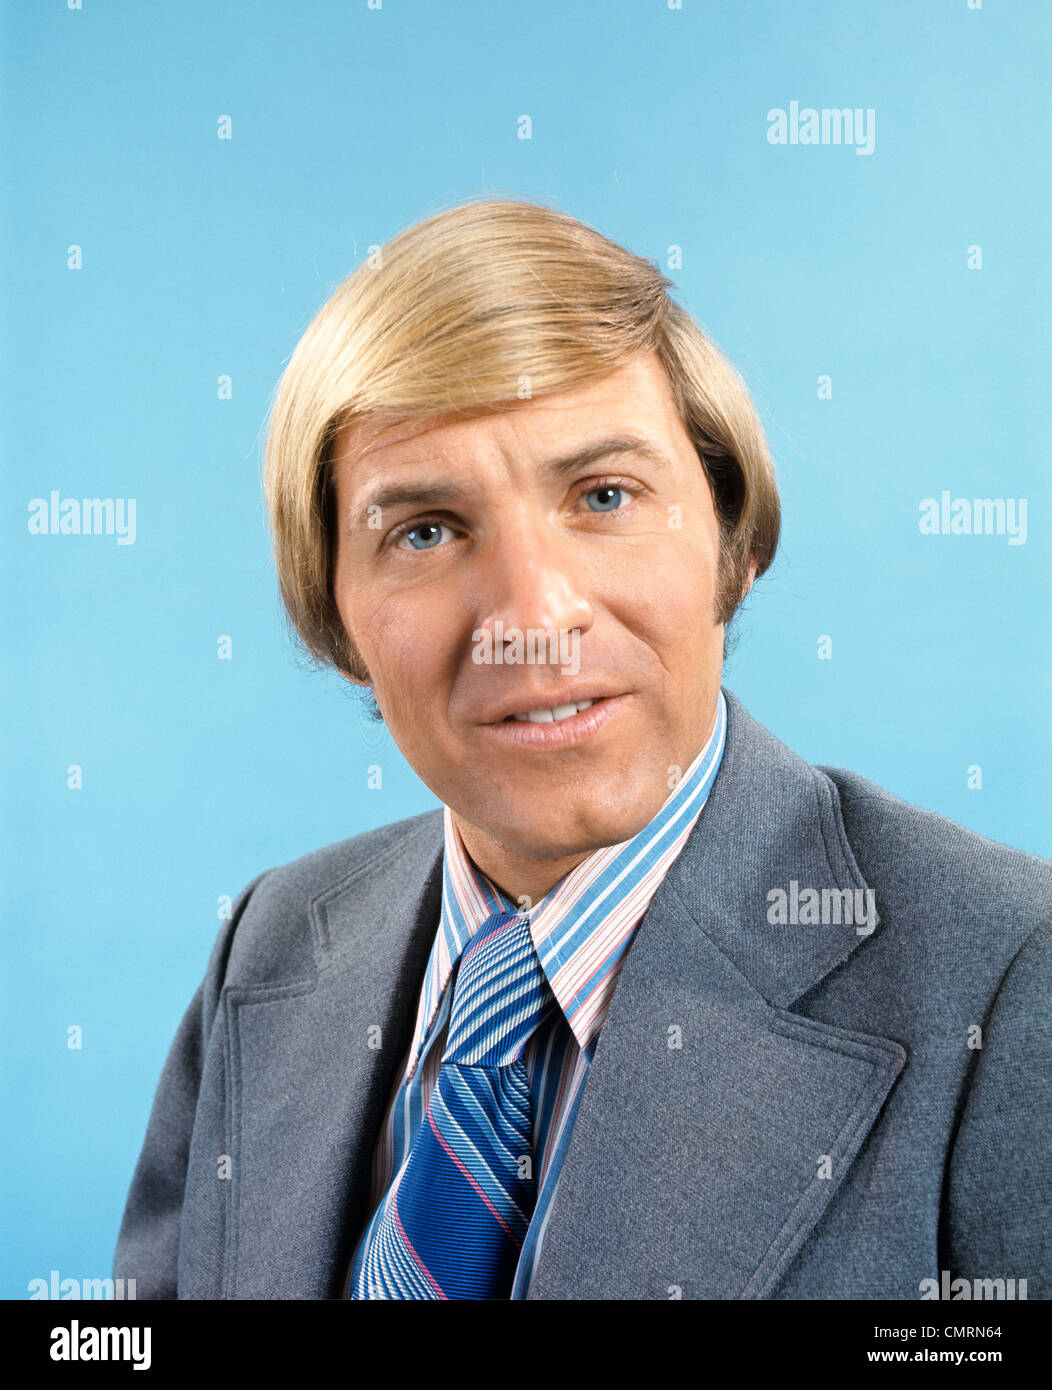 1970 1970s RETRO PORTRAIT OF BLONDE MAN WEARING GREY SUIT BLUE STRIPED TIE Stock Photo